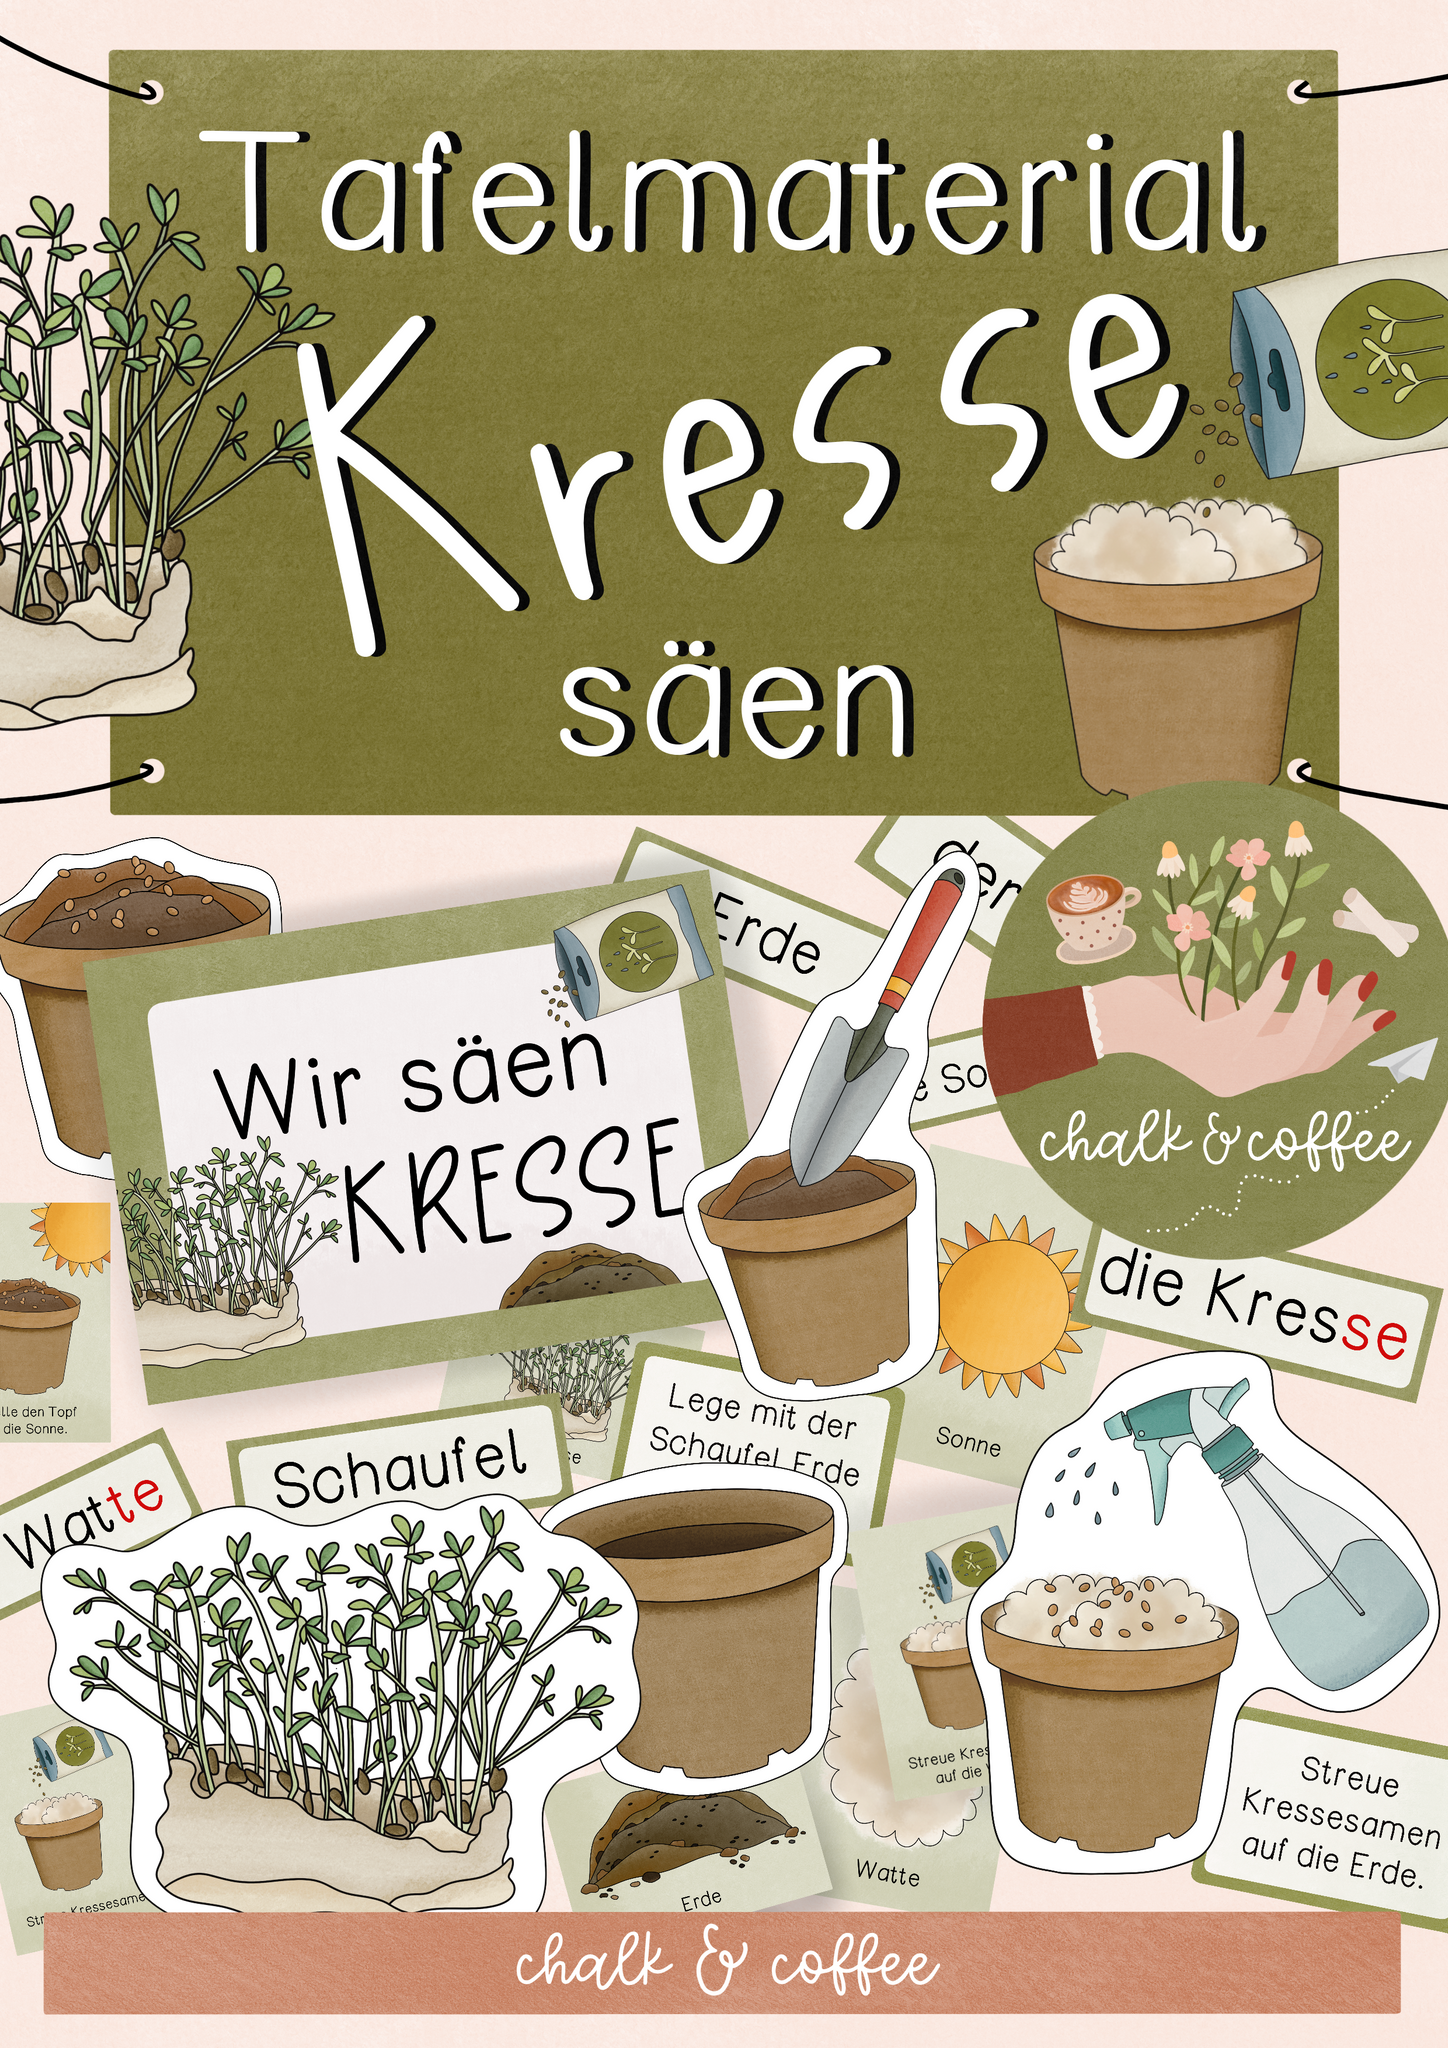 Kresse säen Tafelmaterial - "Wir pflanzen Kresse" Frühling / Ostern Experiment (PDF)